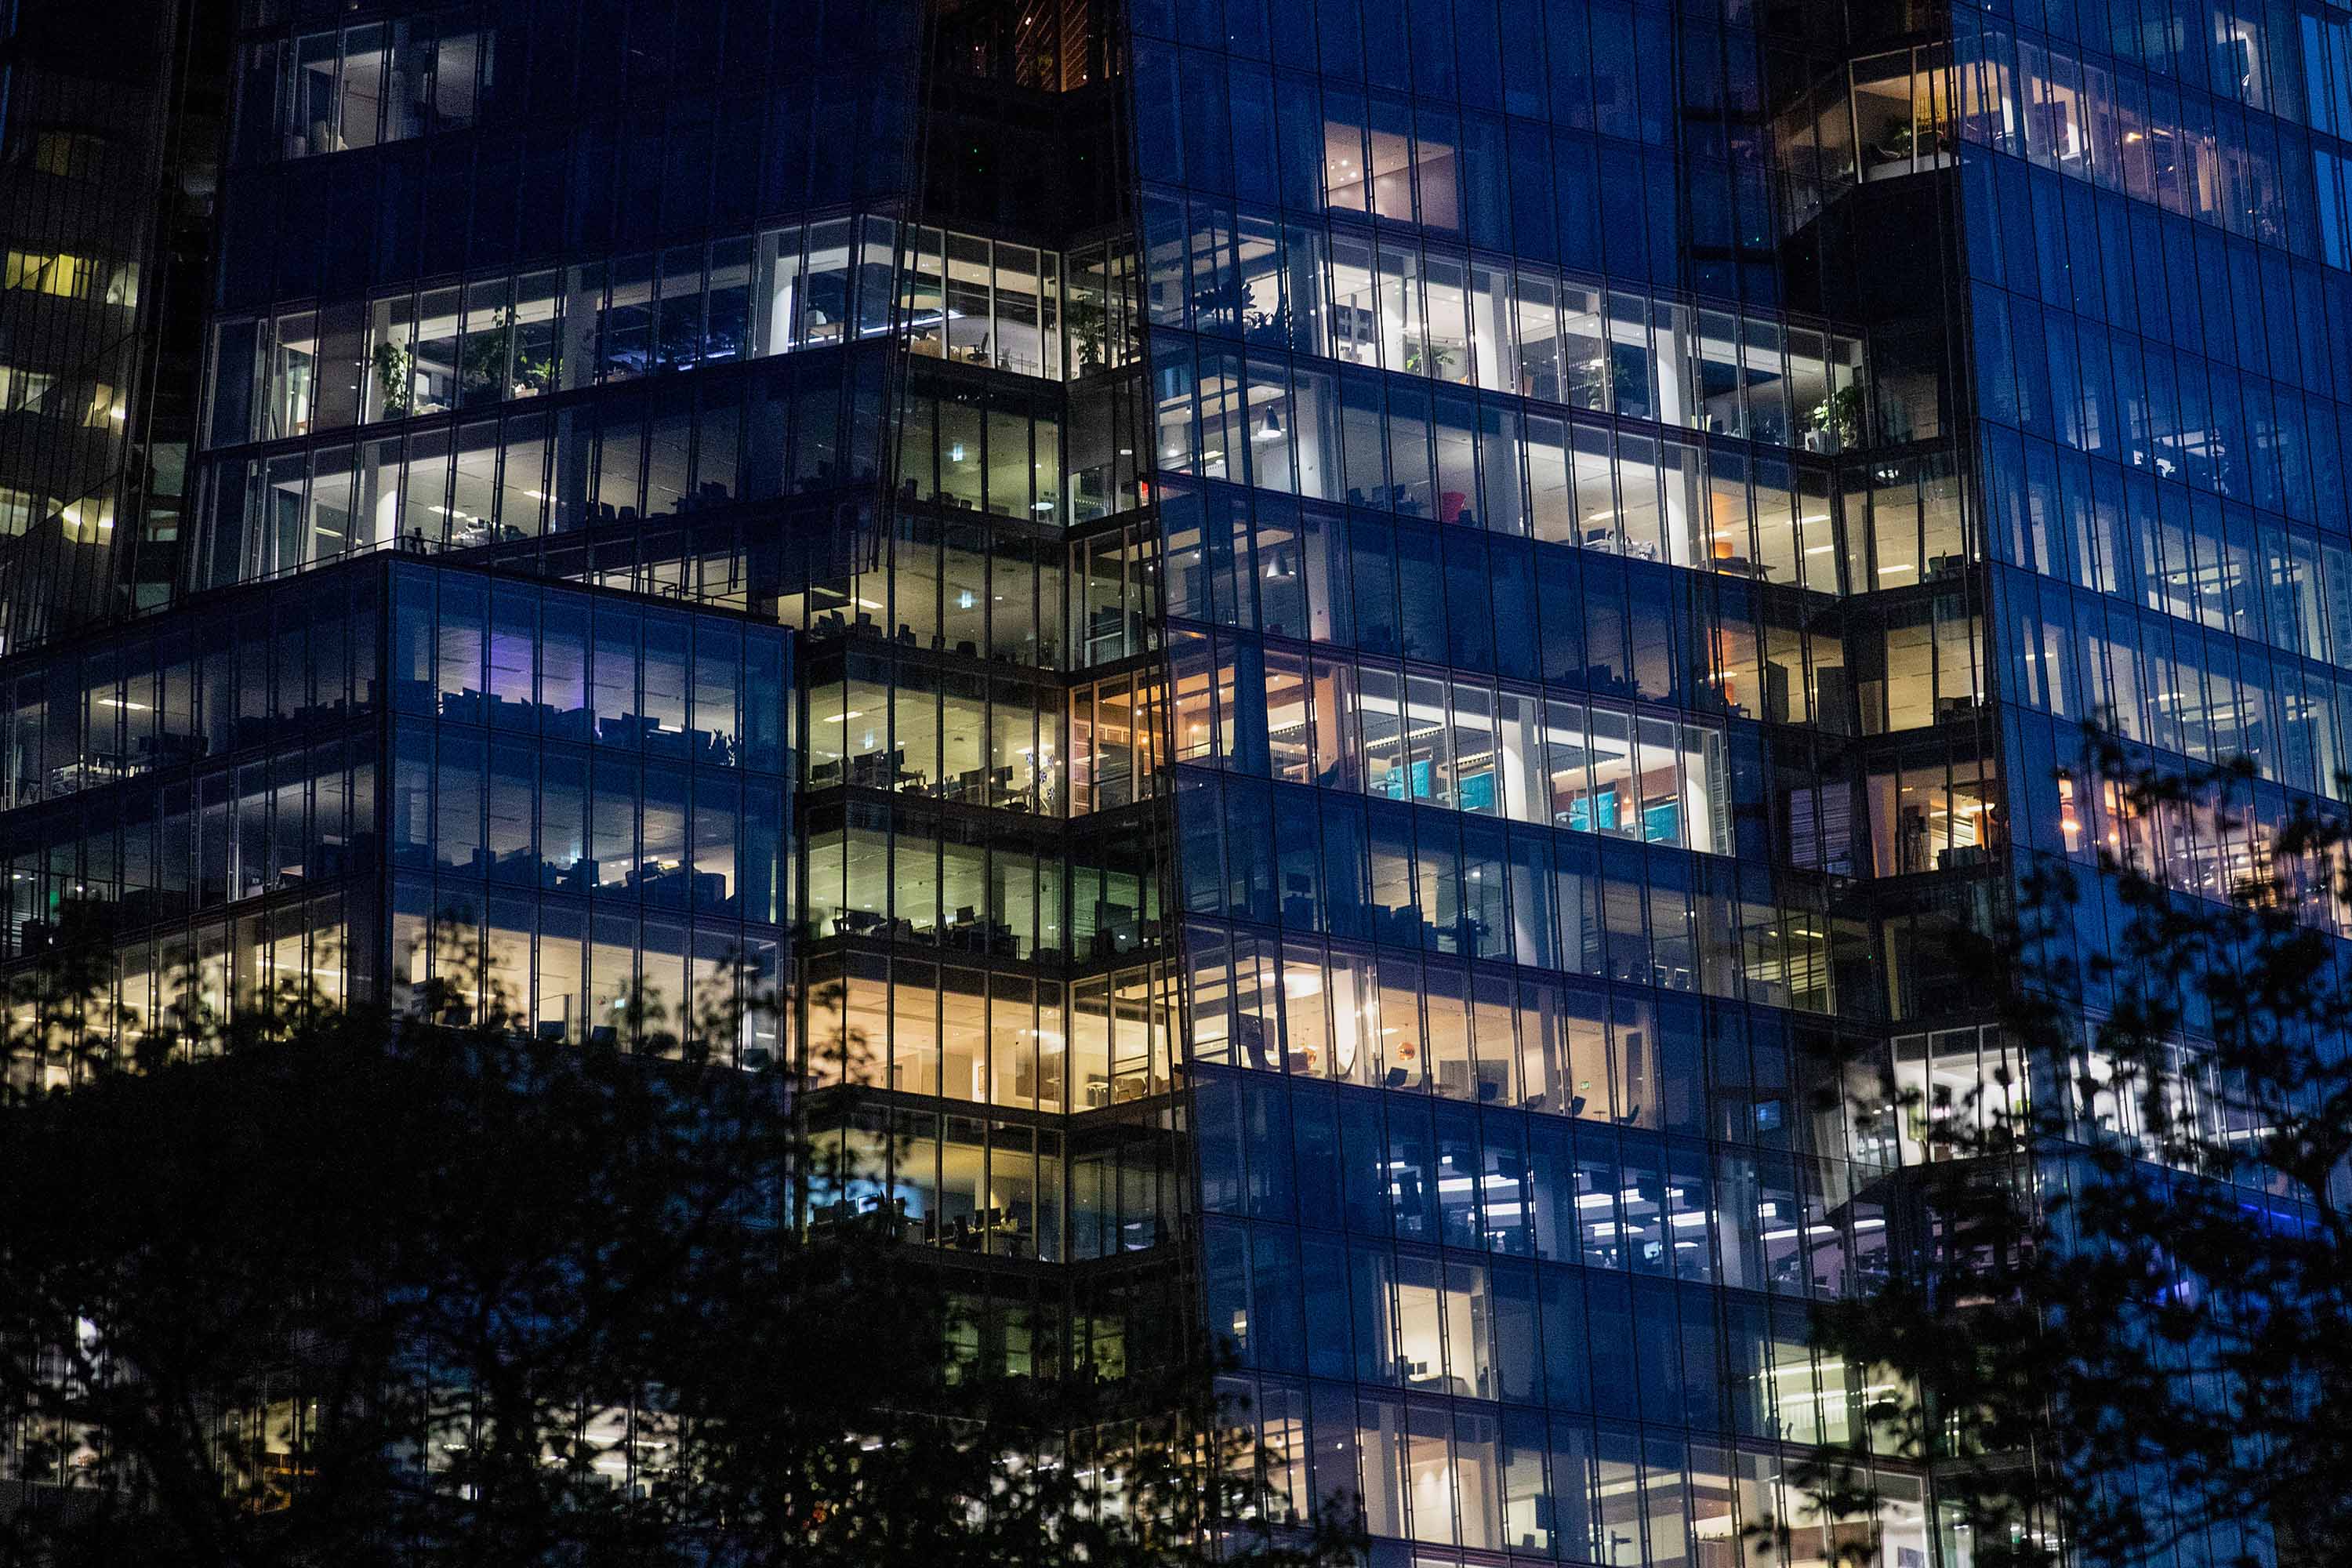 Office floors are seen illuminated in The Shard skycraper in London, on April 24.